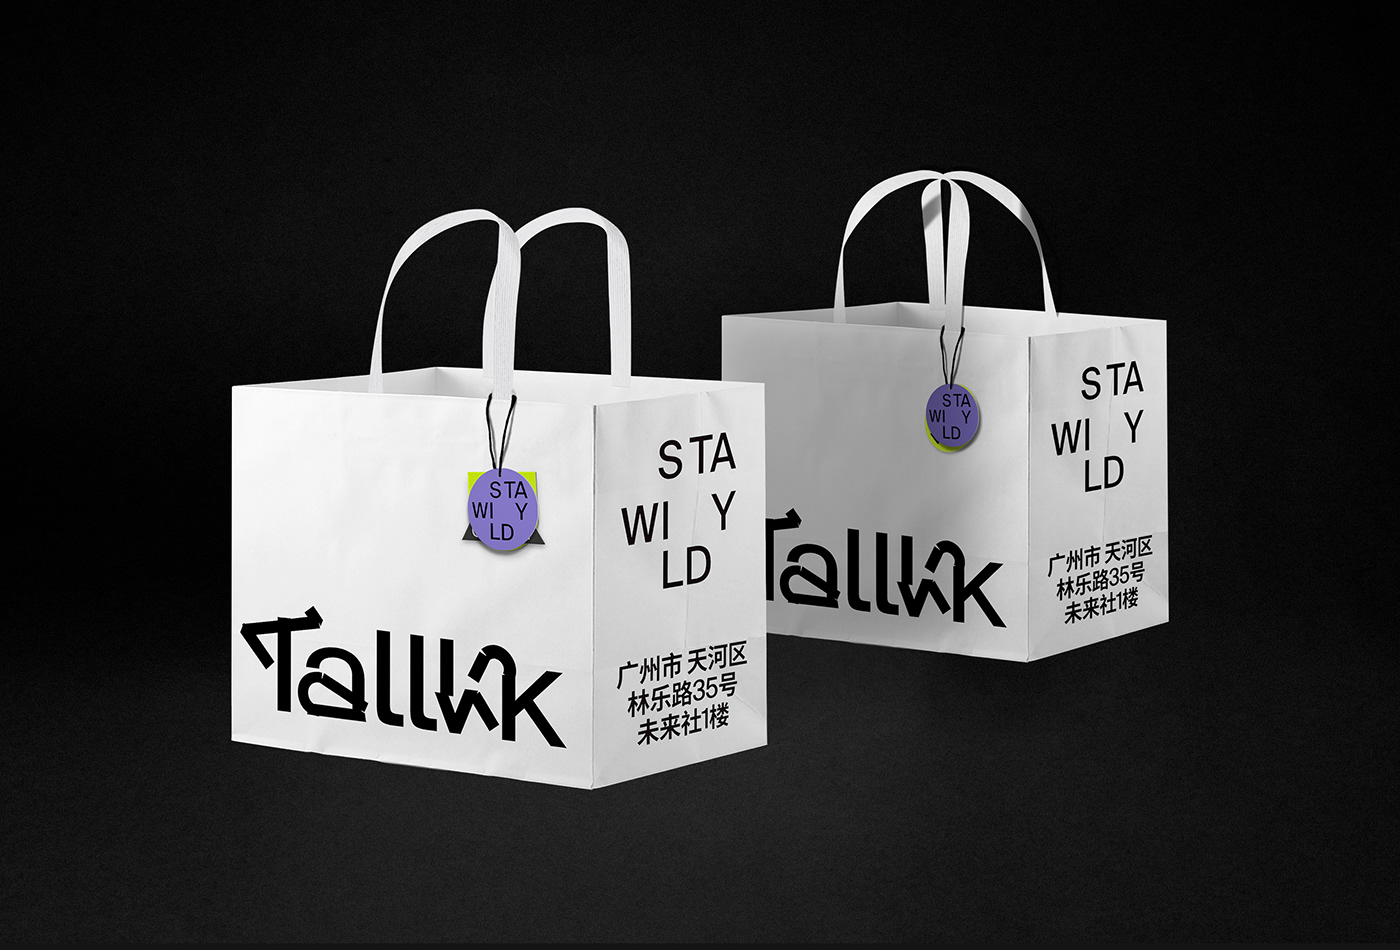 Talllk cafe咖啡品牌VI设计